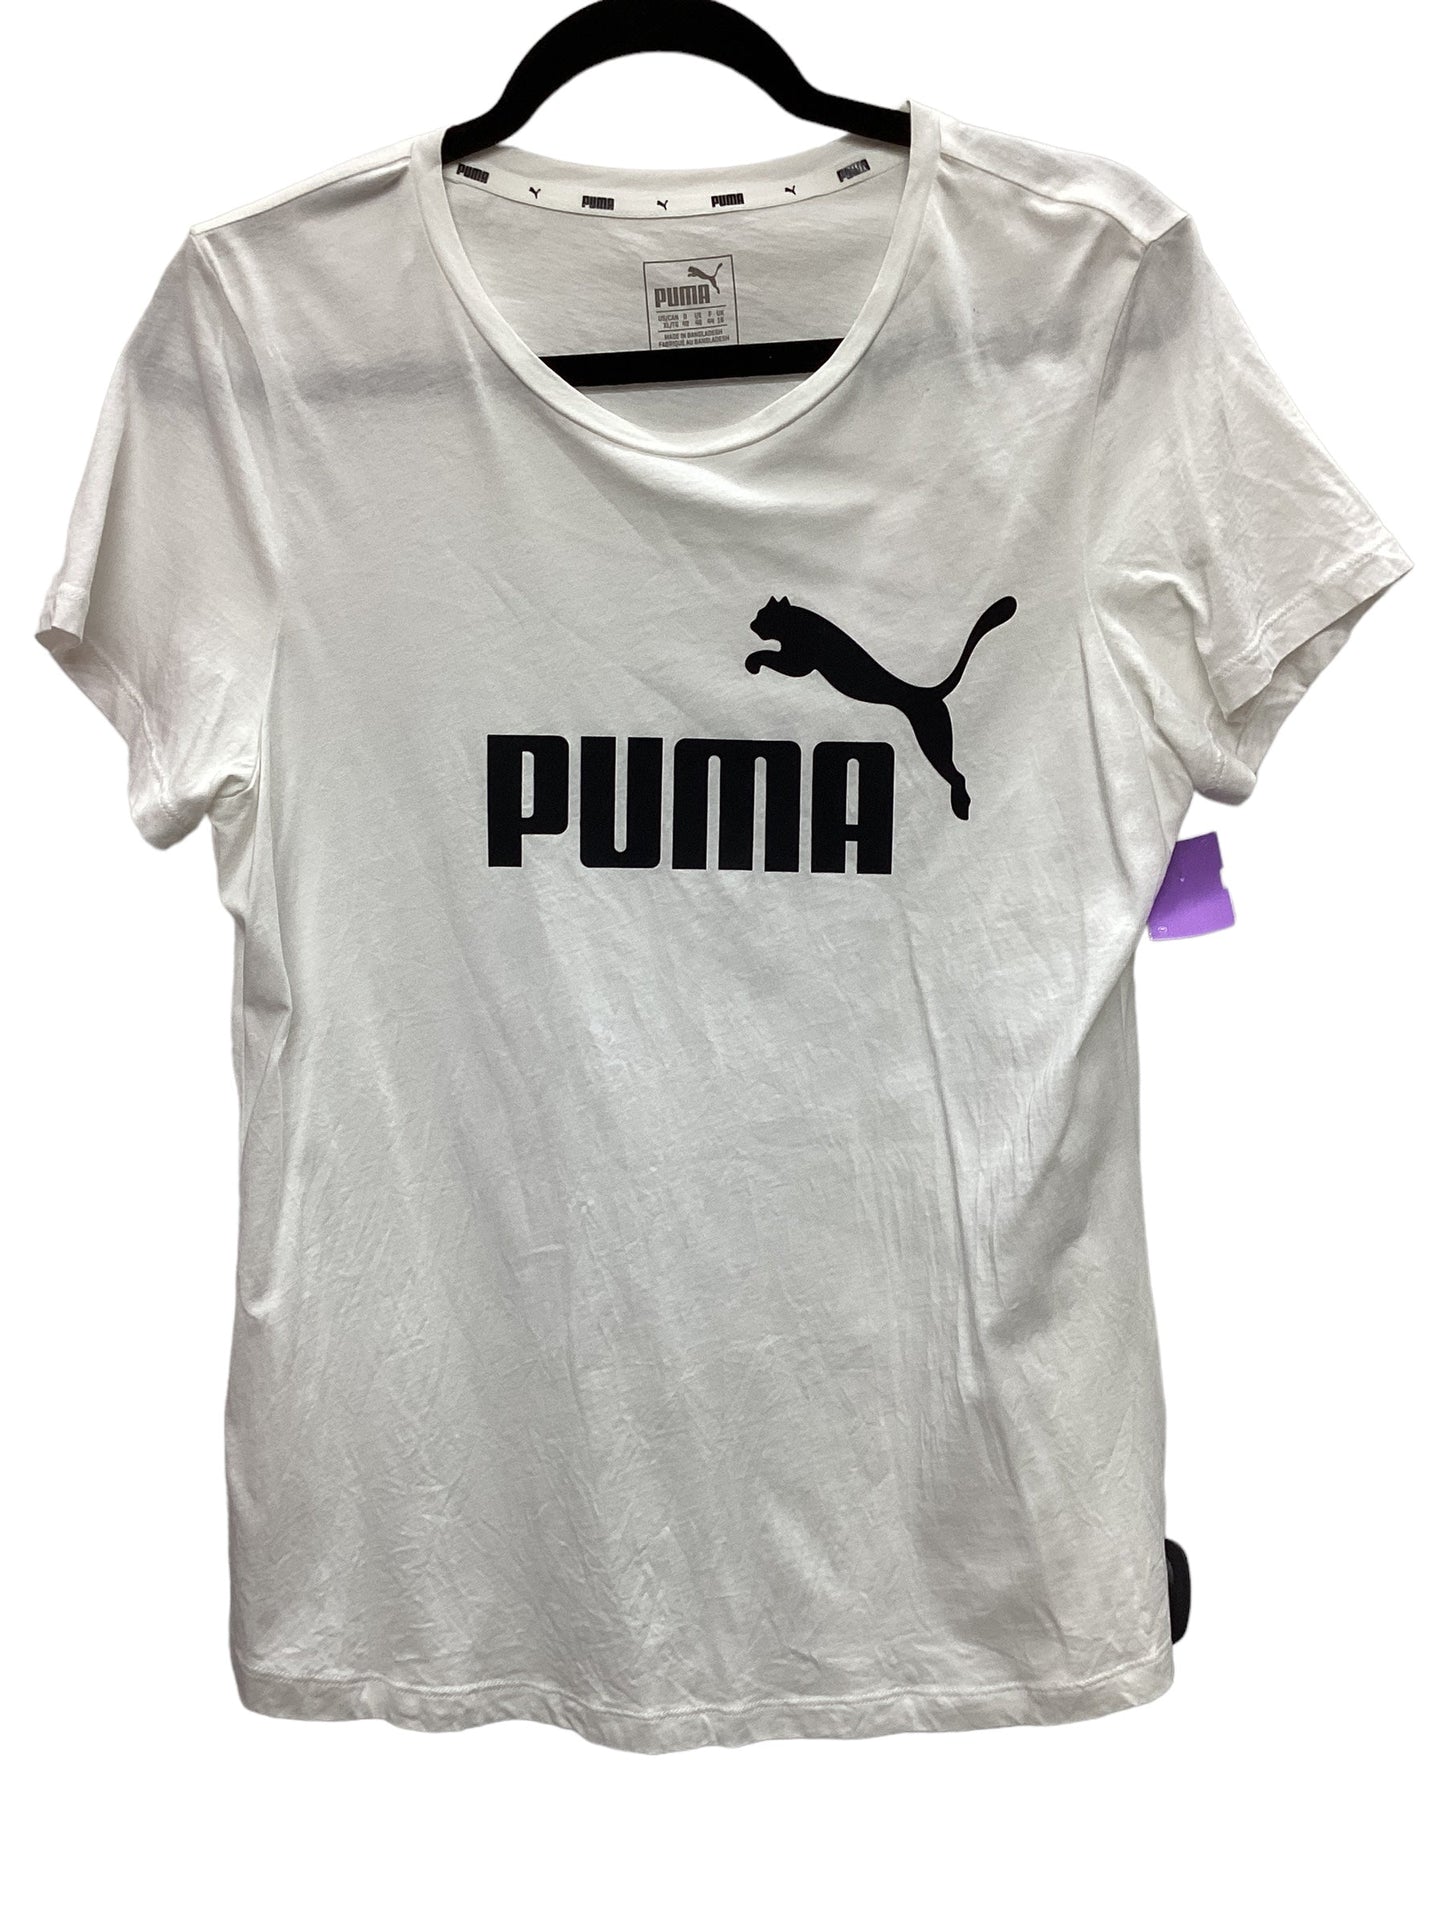 White Athletic Top Short Sleeve Puma, Size Xl